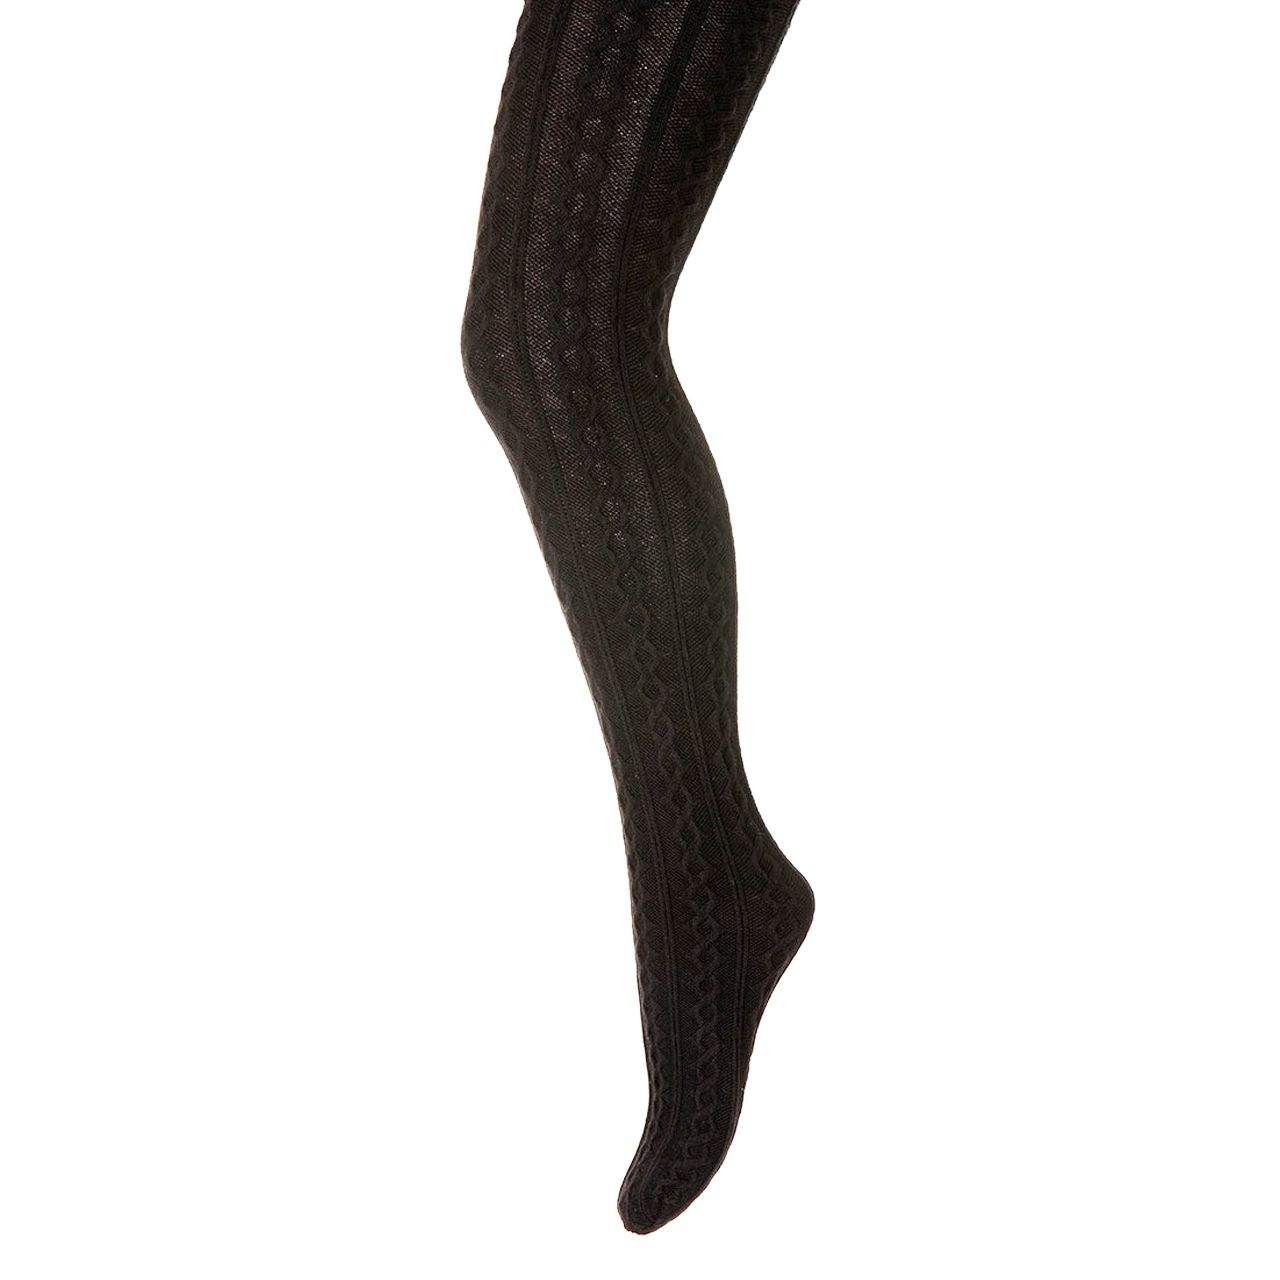 جوراب شلواری دخترانه پنتی مدل کارینا رنگ مشکی -  - 3